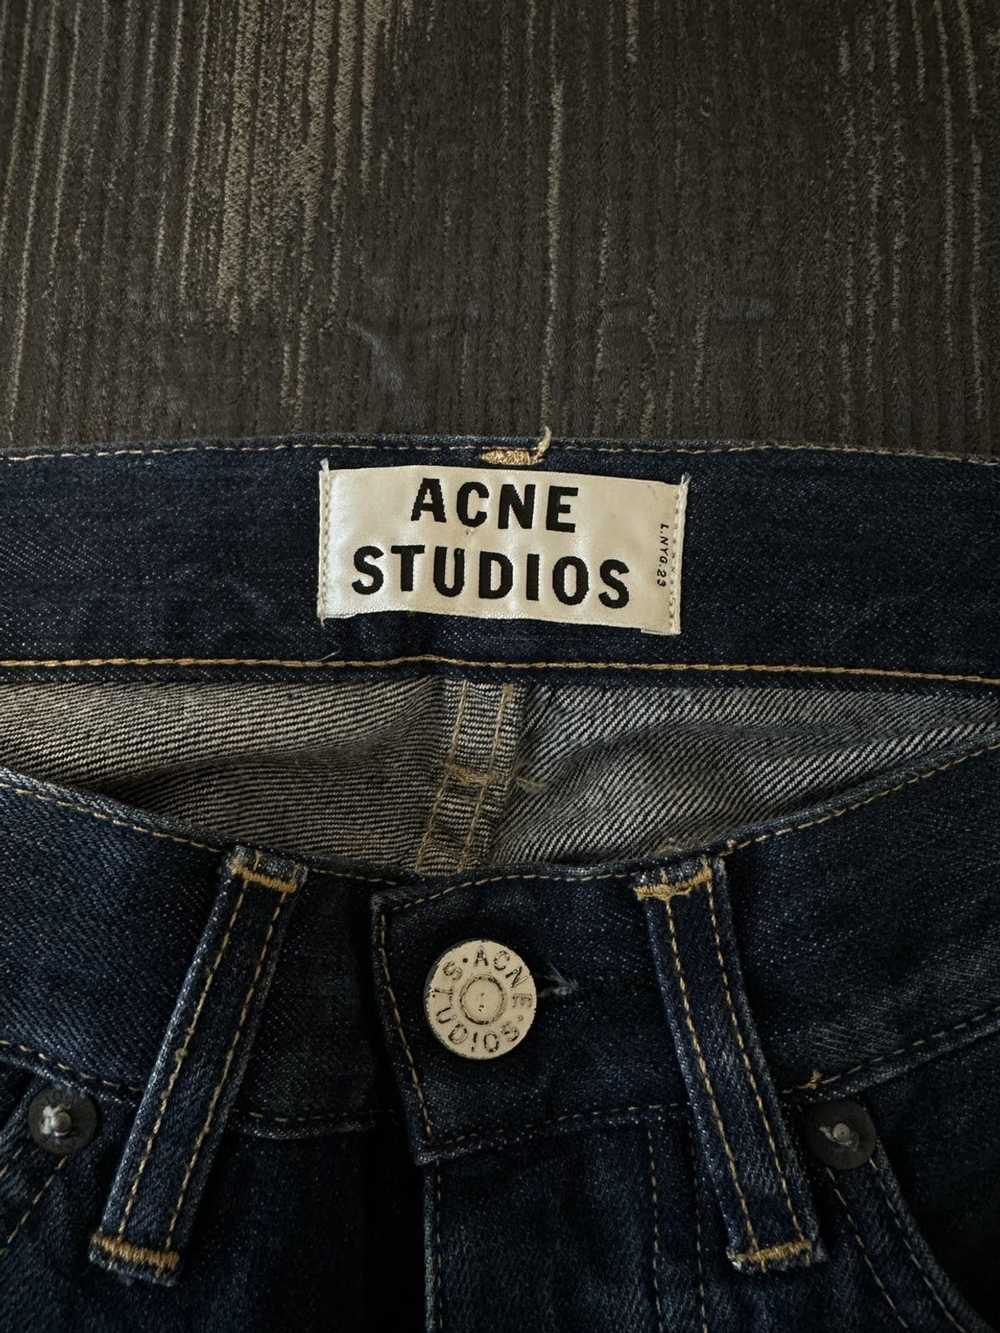 Acne Studios Acne Studios Slim Fit Jeans (29x32) - image 5